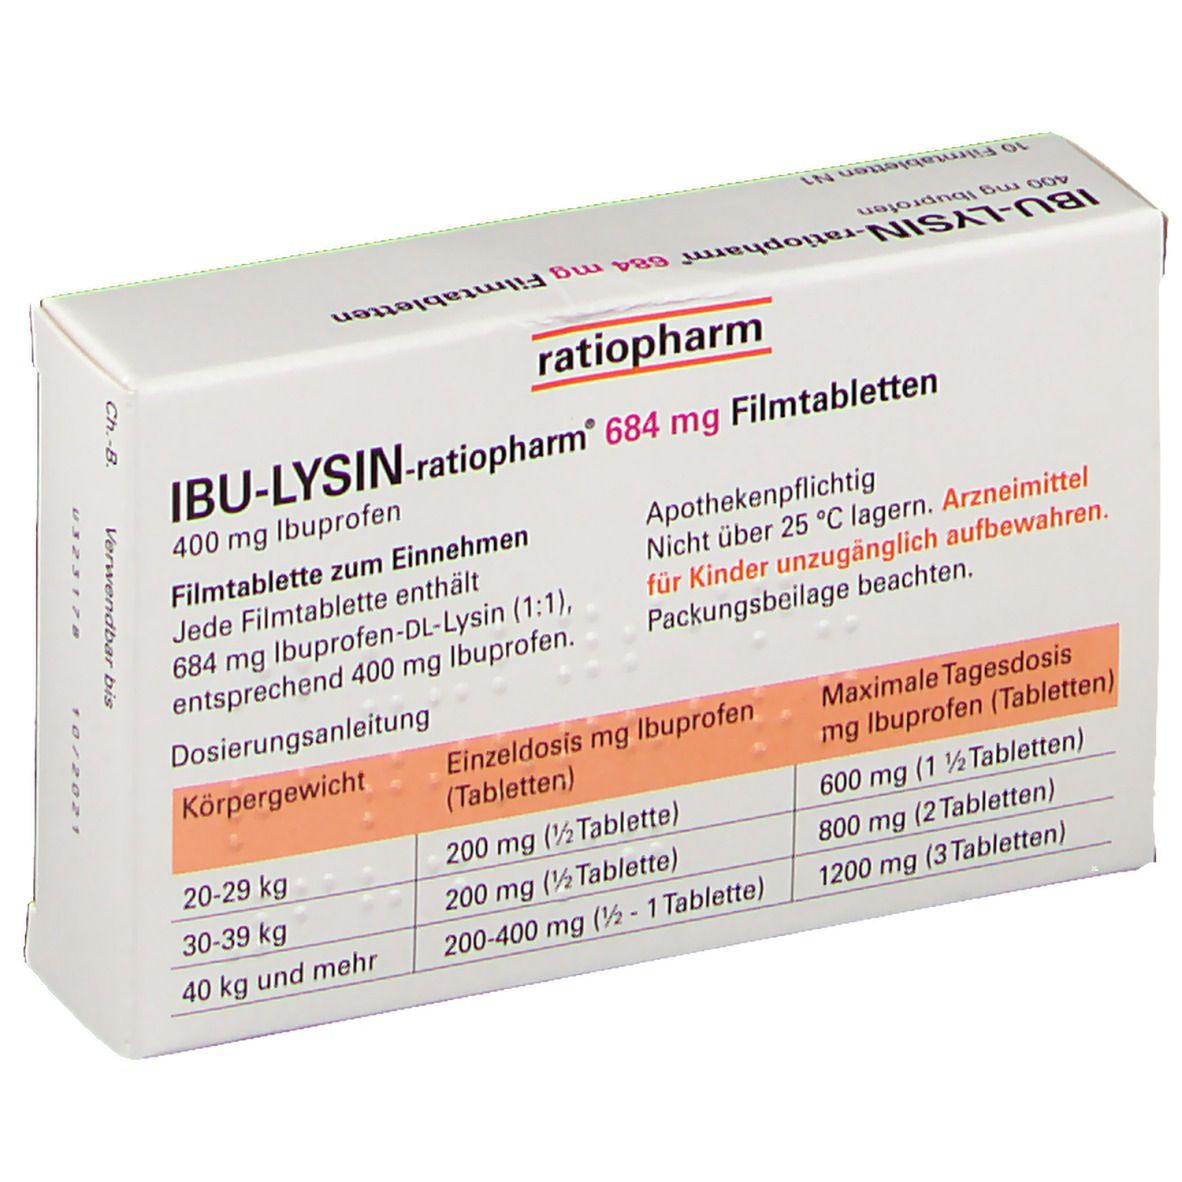 IBU-LYSIN-ratiopharm® 684 mg 10 St - shop-apotheke.at